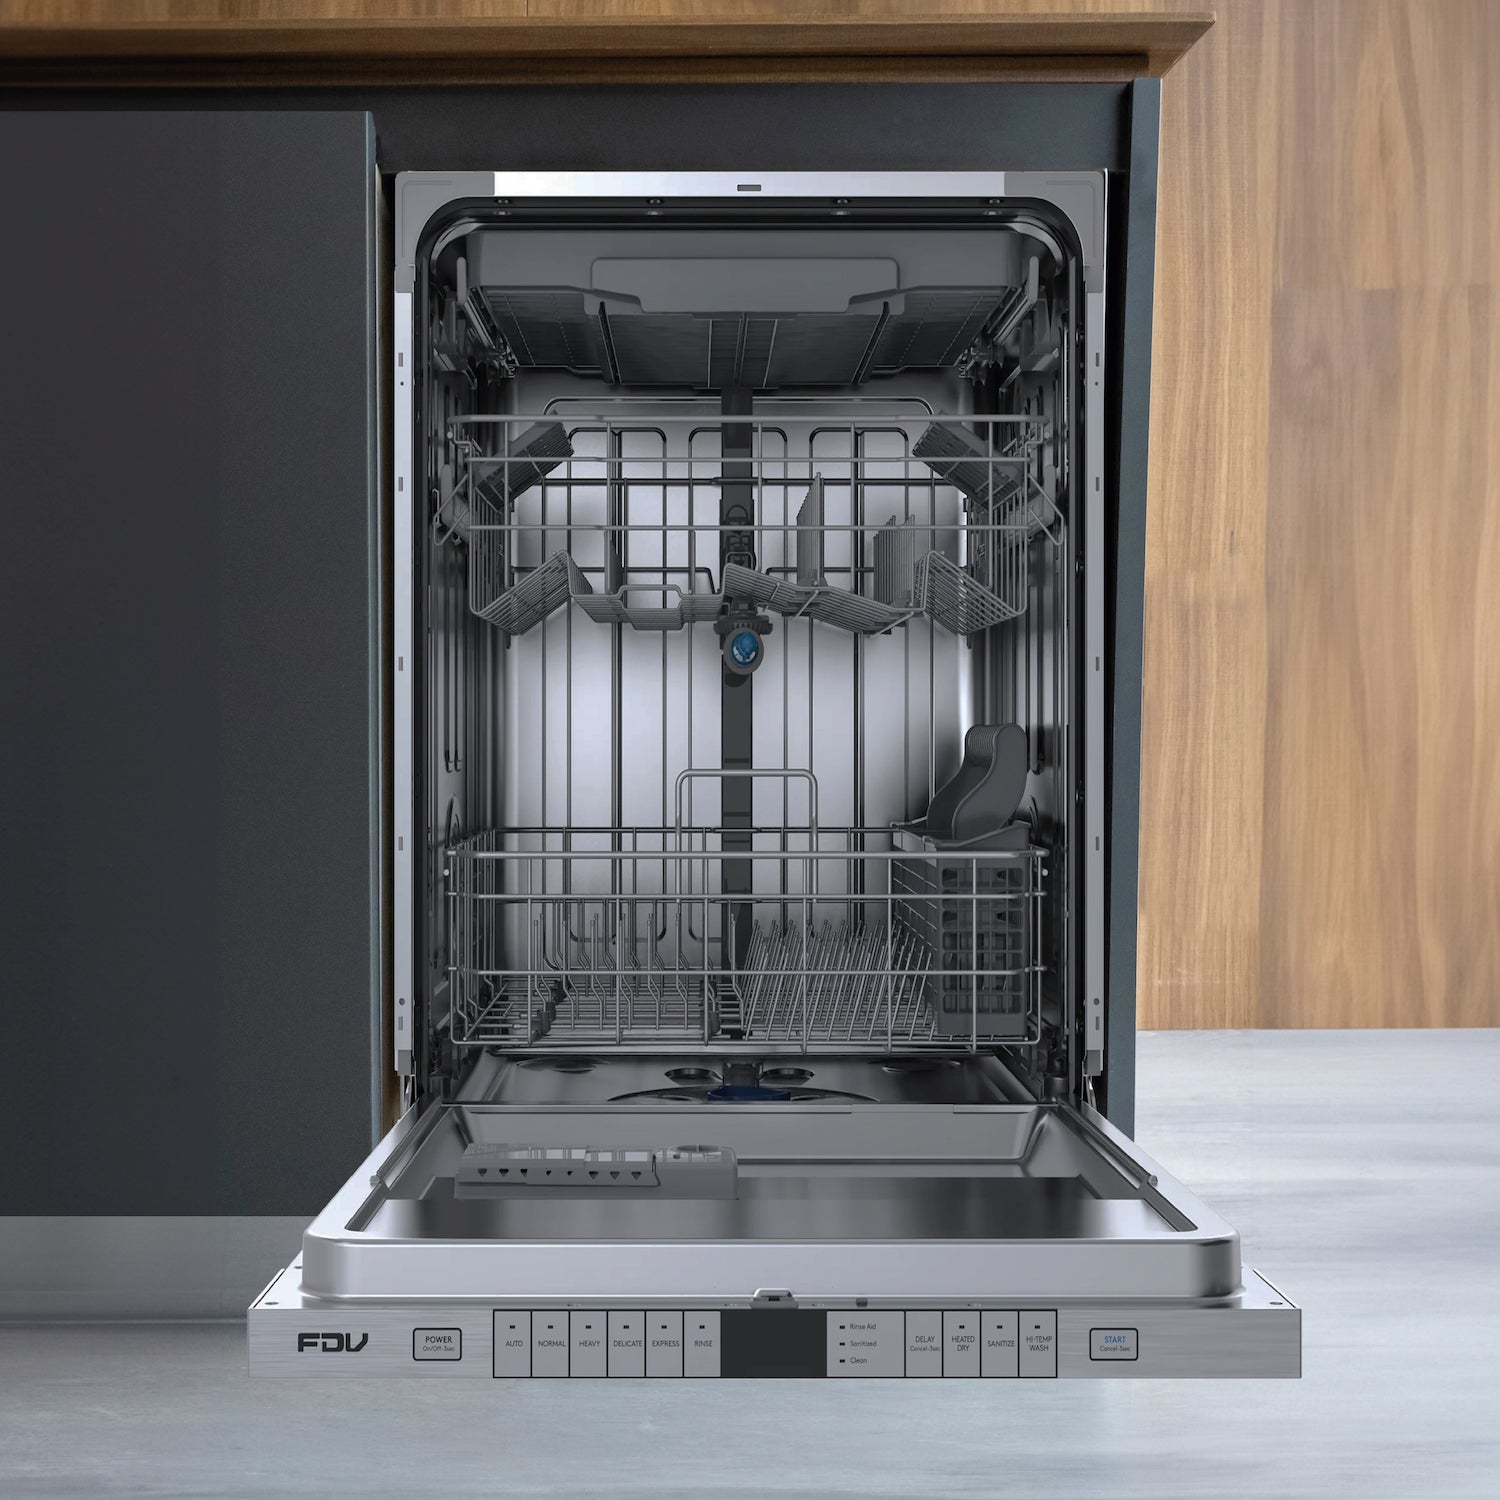 Elite 18 dishwasher